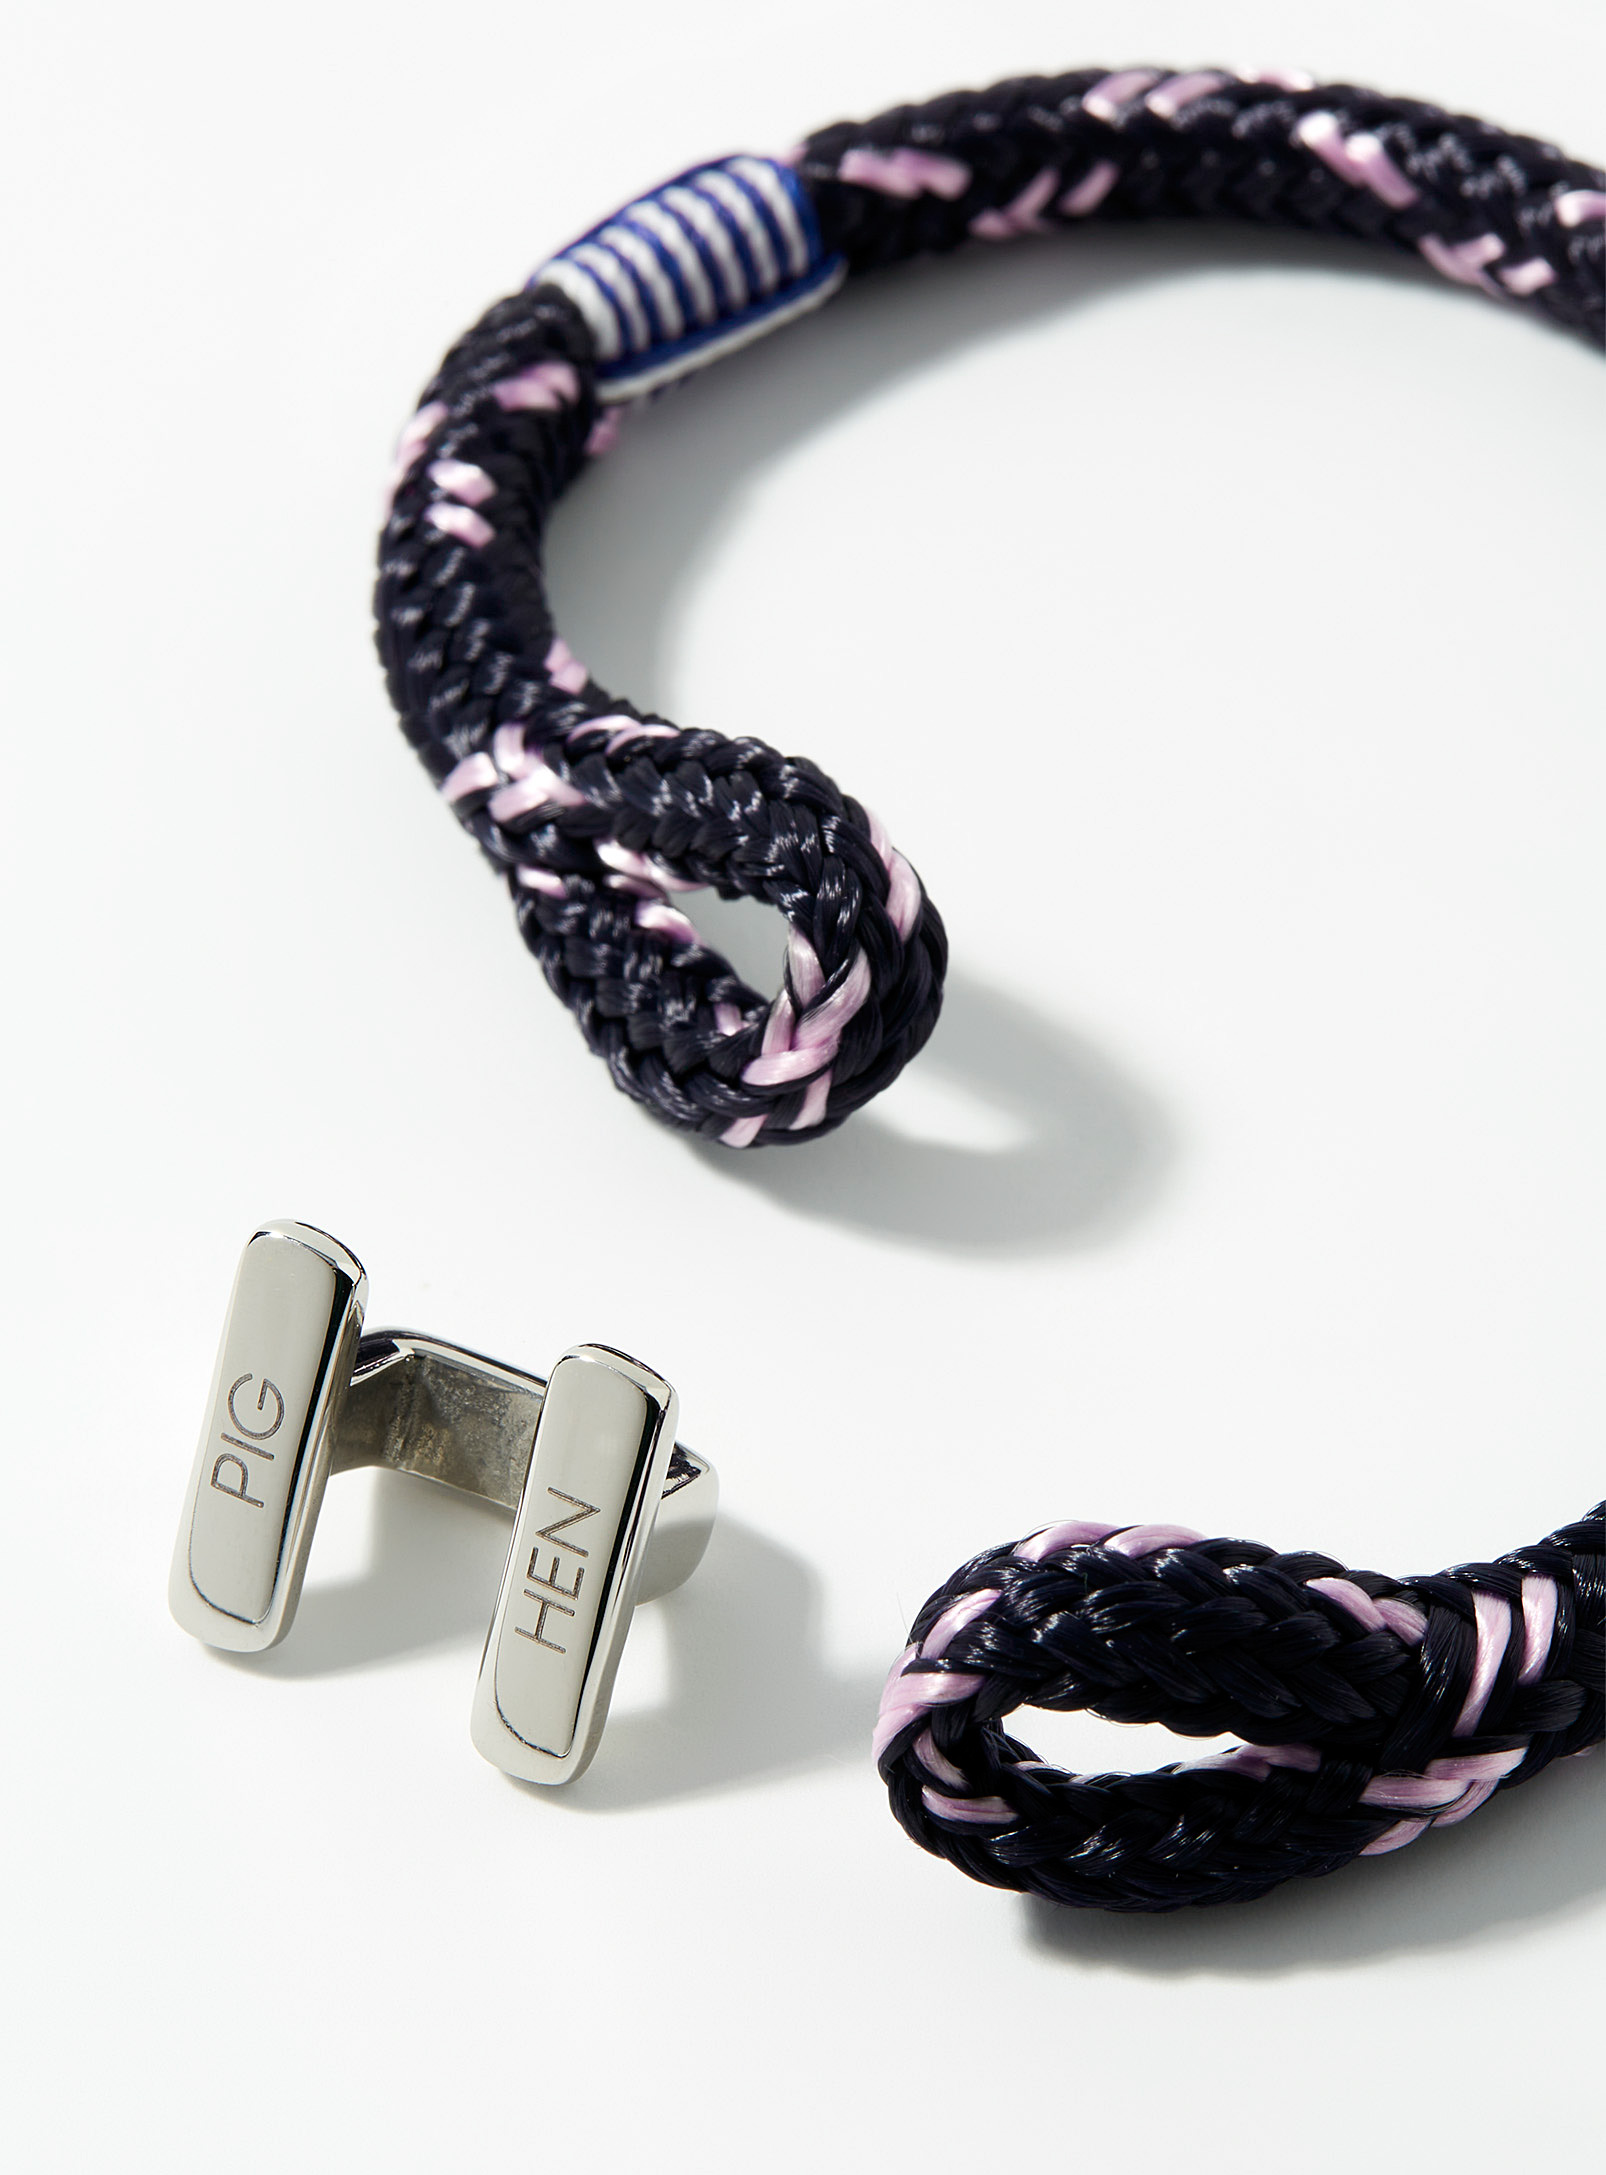 Pig & Hen - Le bracelet corde Icy Ike